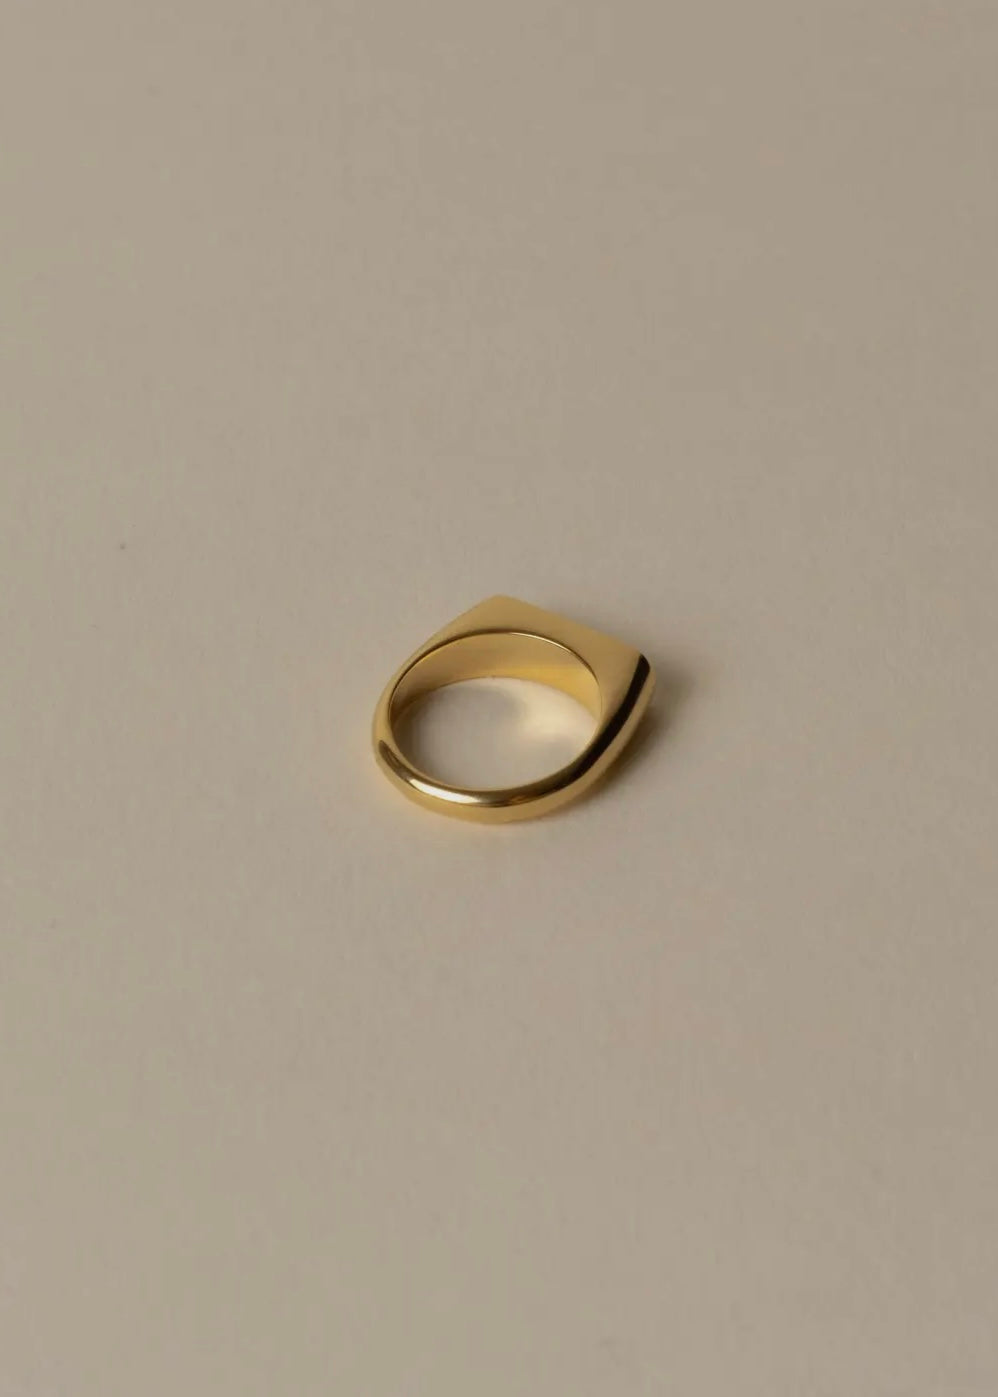 White Gold Bar Ring